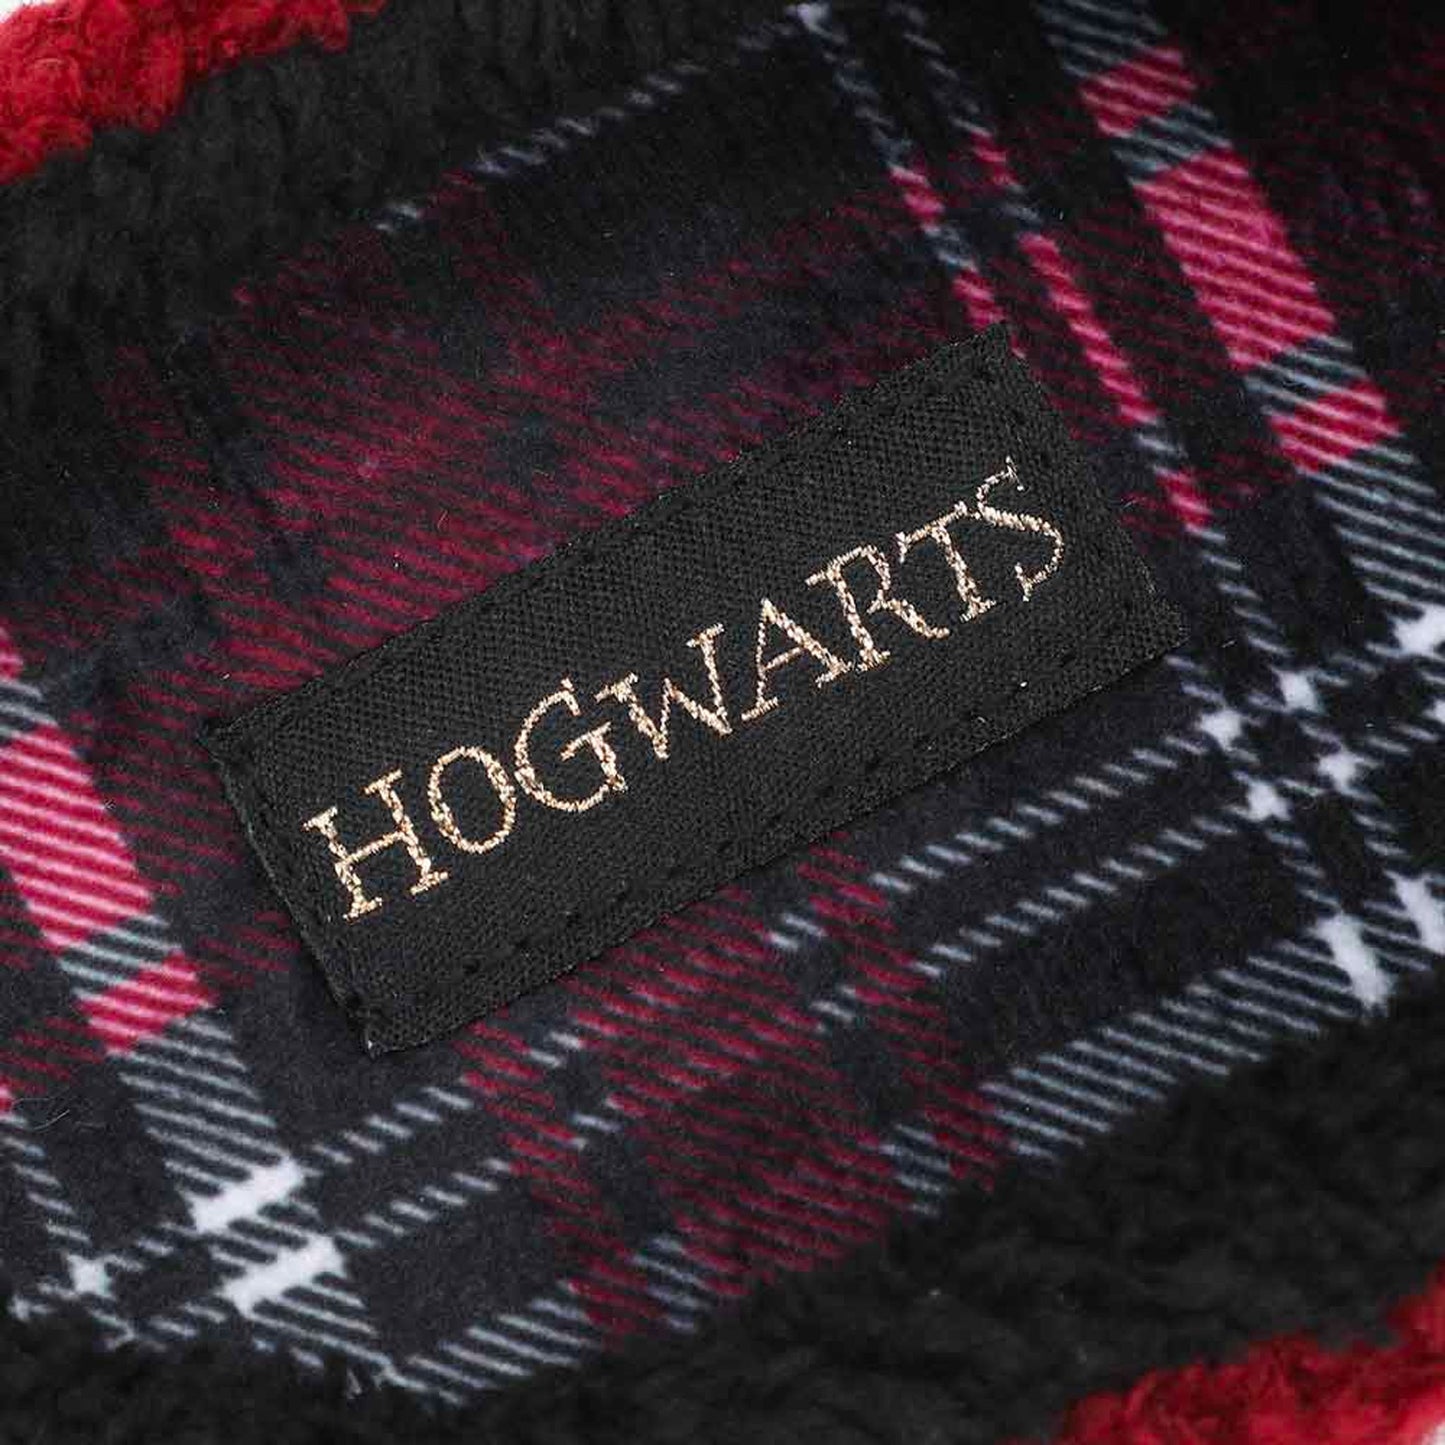 Hogwarts (Harry Potter) Lounge Slippers